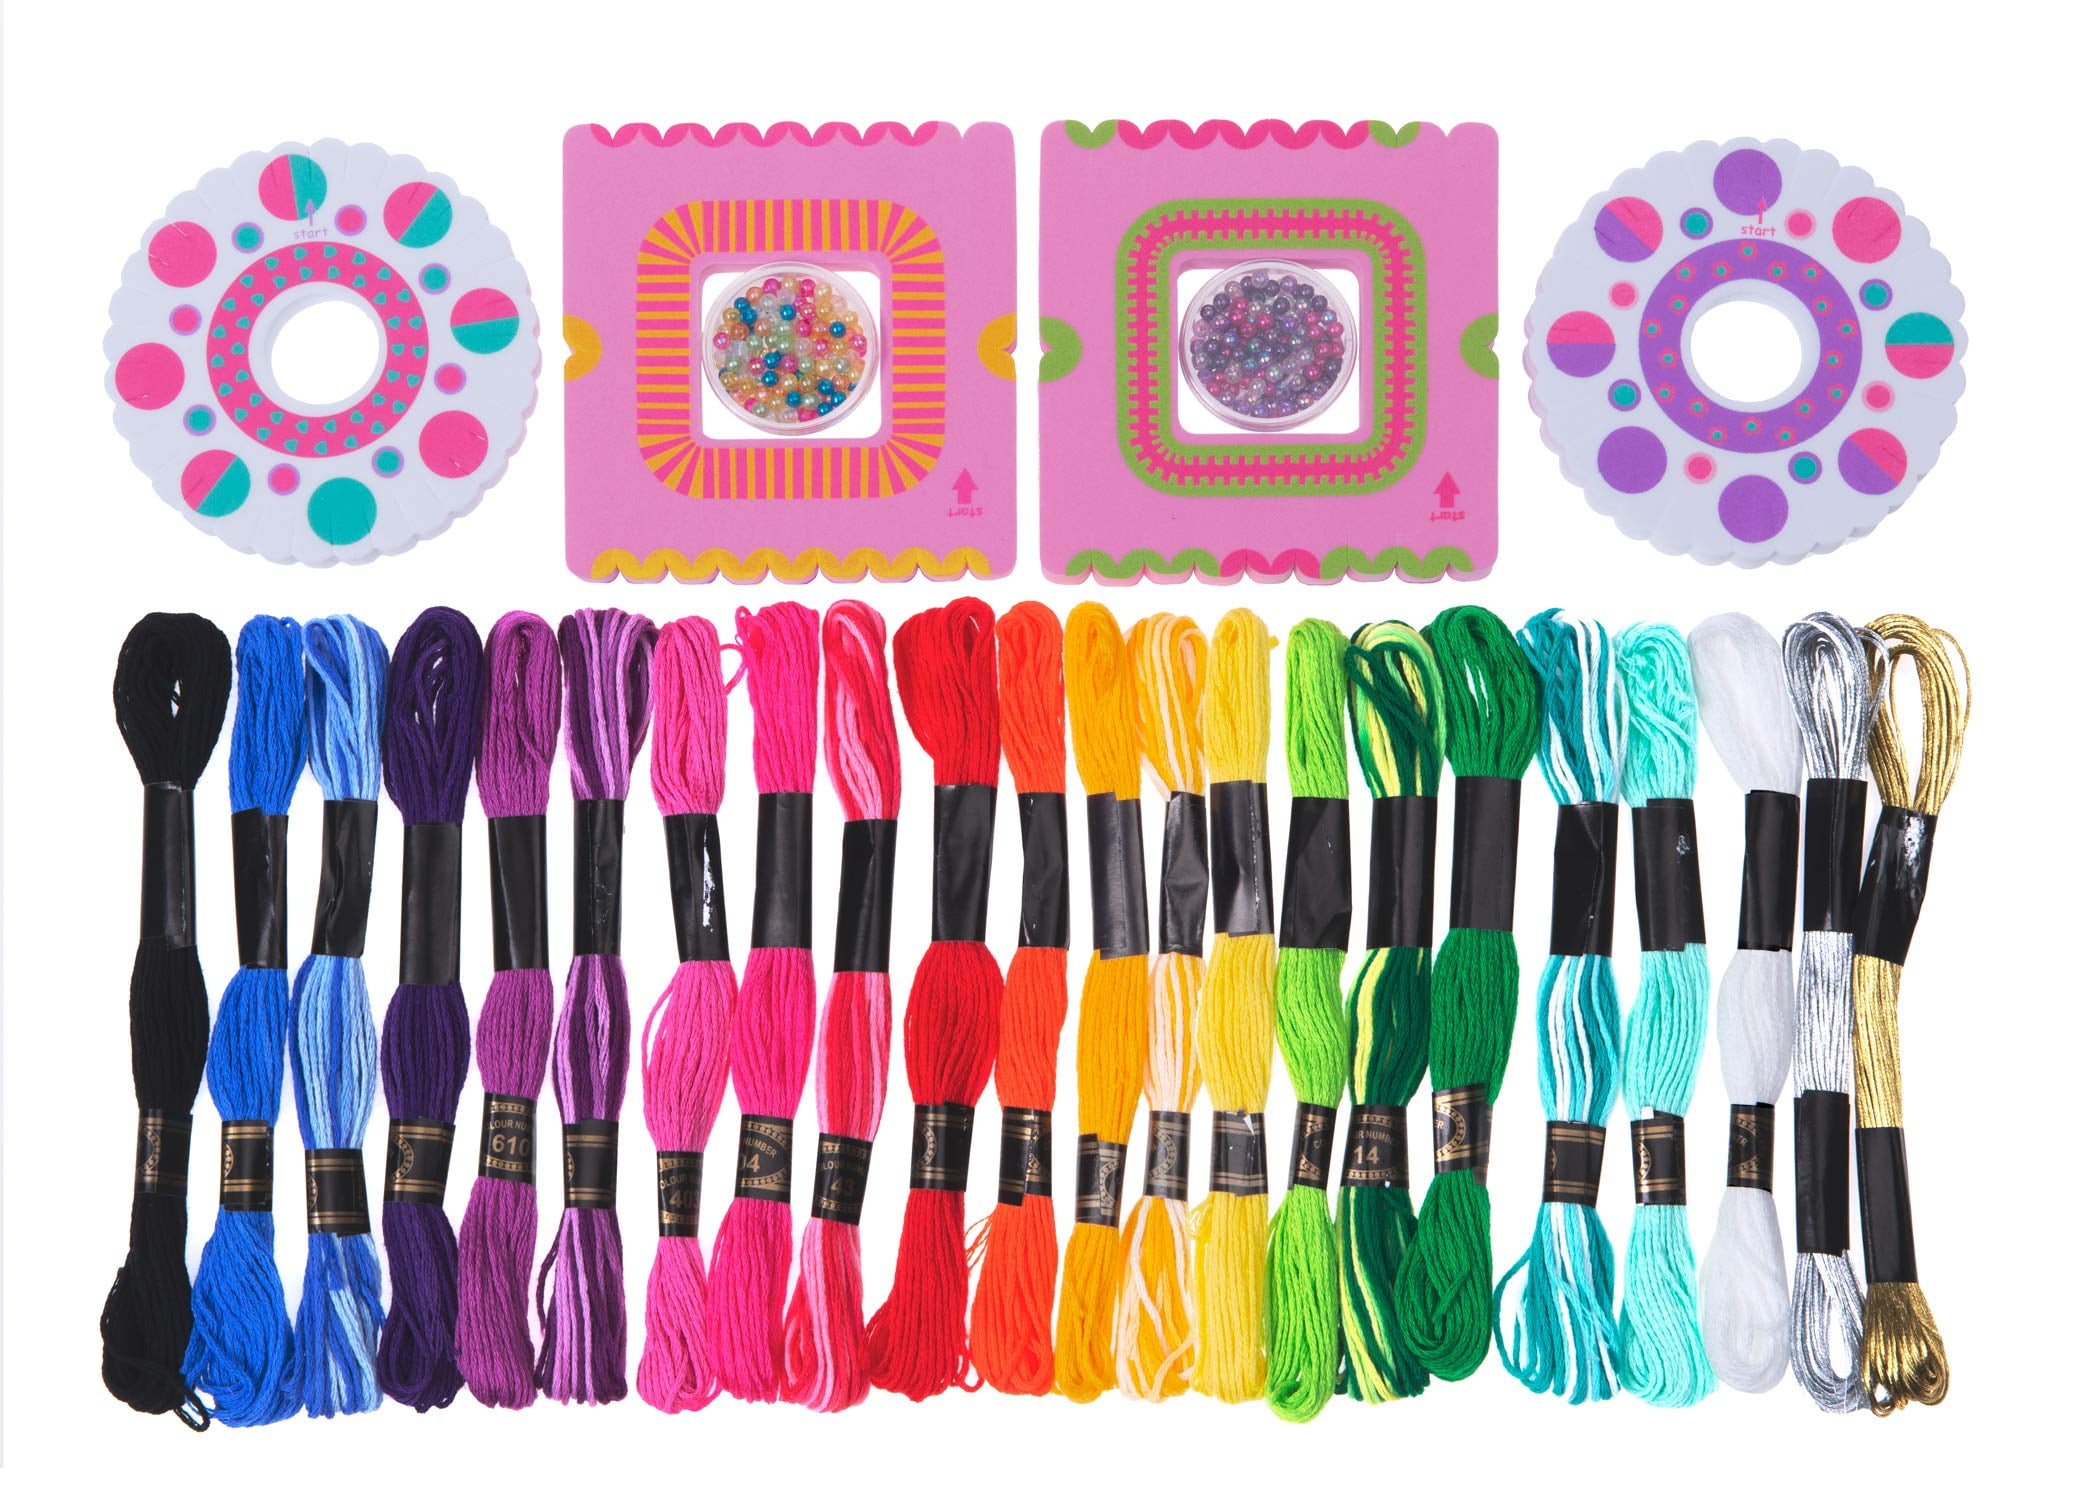 Faber-Castell Friendship Bracelet Kits